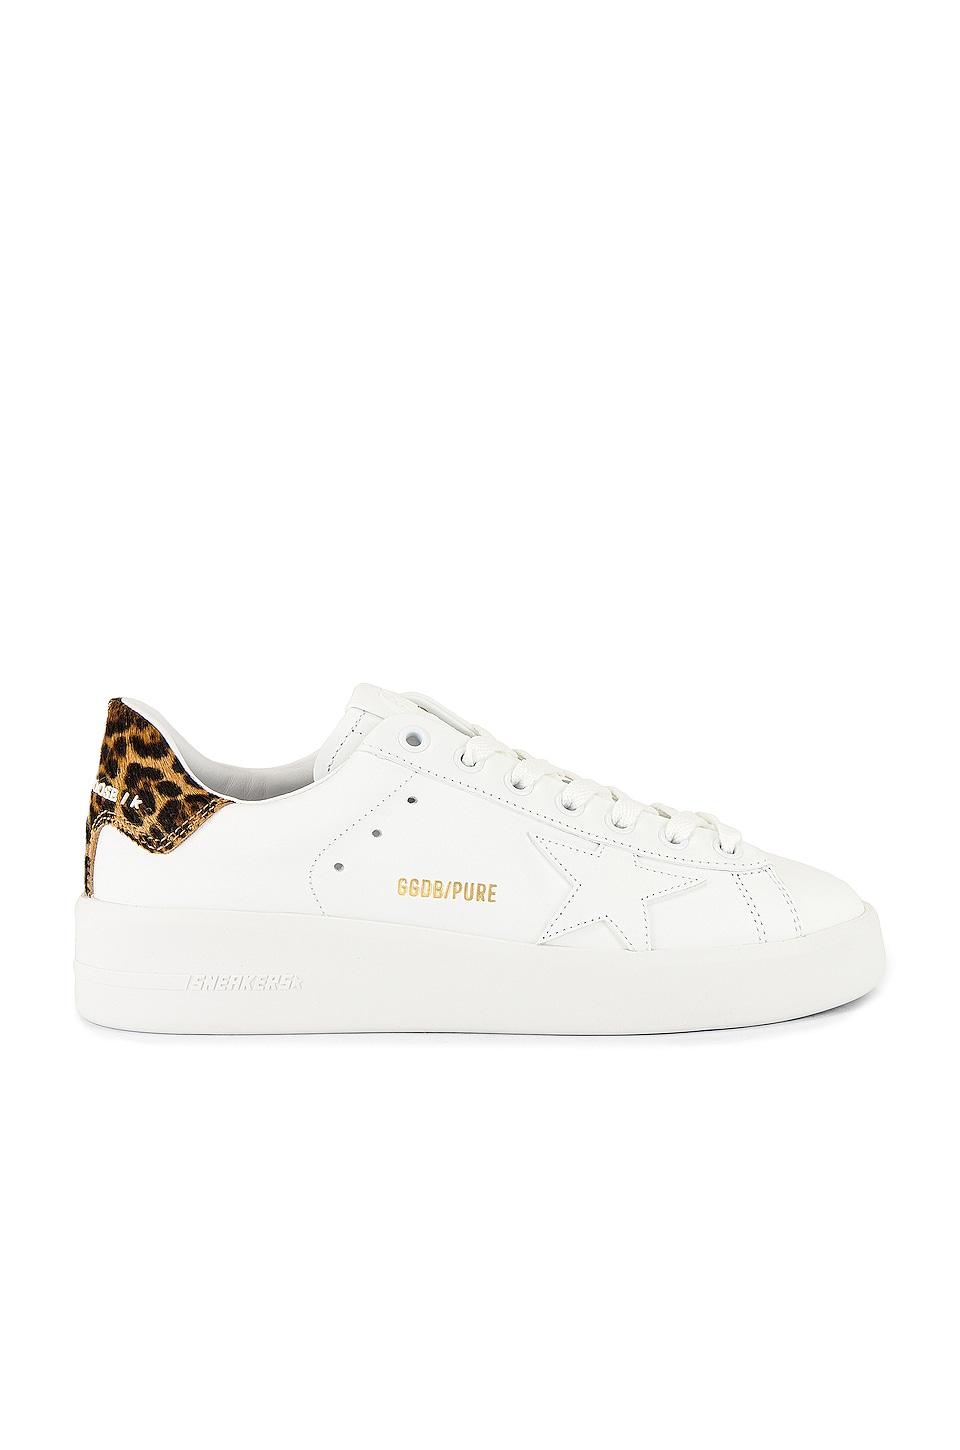 Golden Goose Pure Star Sneaker in White & Brown Leopard | REVOLVE